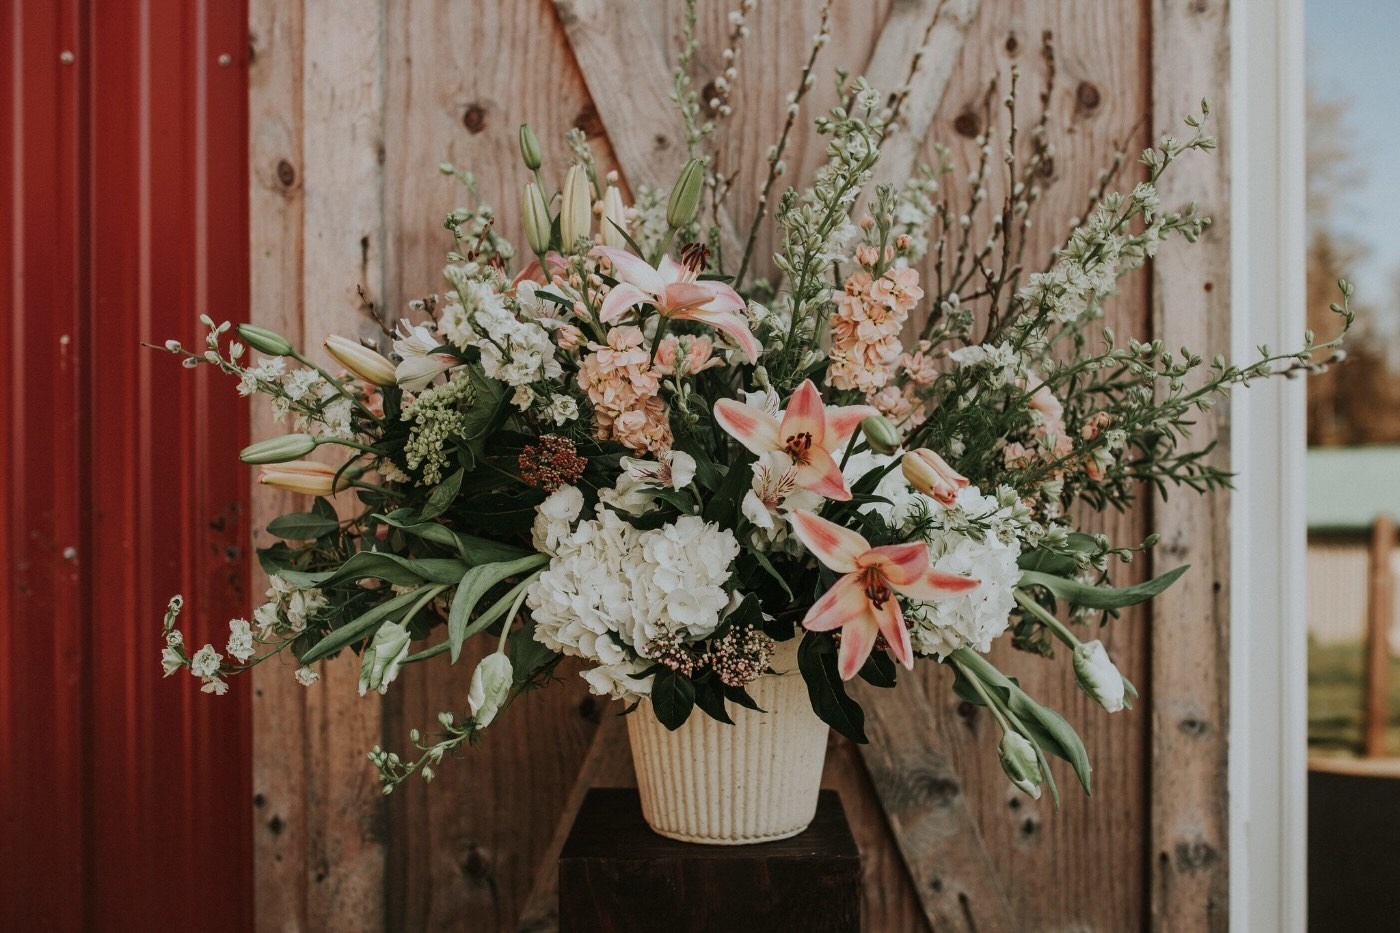 How To Make Large Floral Arrangements